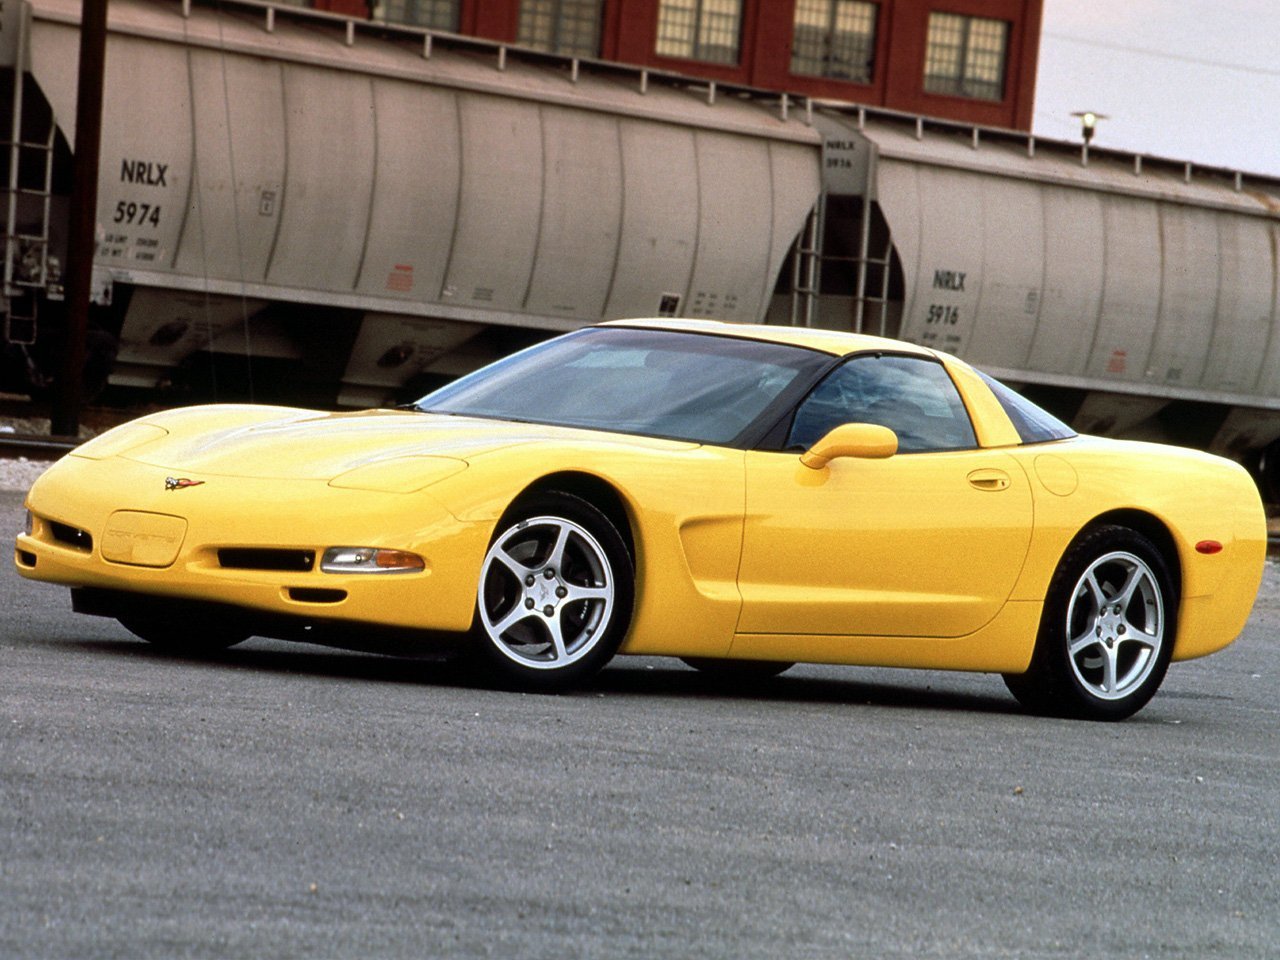 Расход газа четырёх комплектаций купе Chevrolet Corvette. Разница стоимости заправки газом и бензином. Автономный пробег до и после установки ГБО.